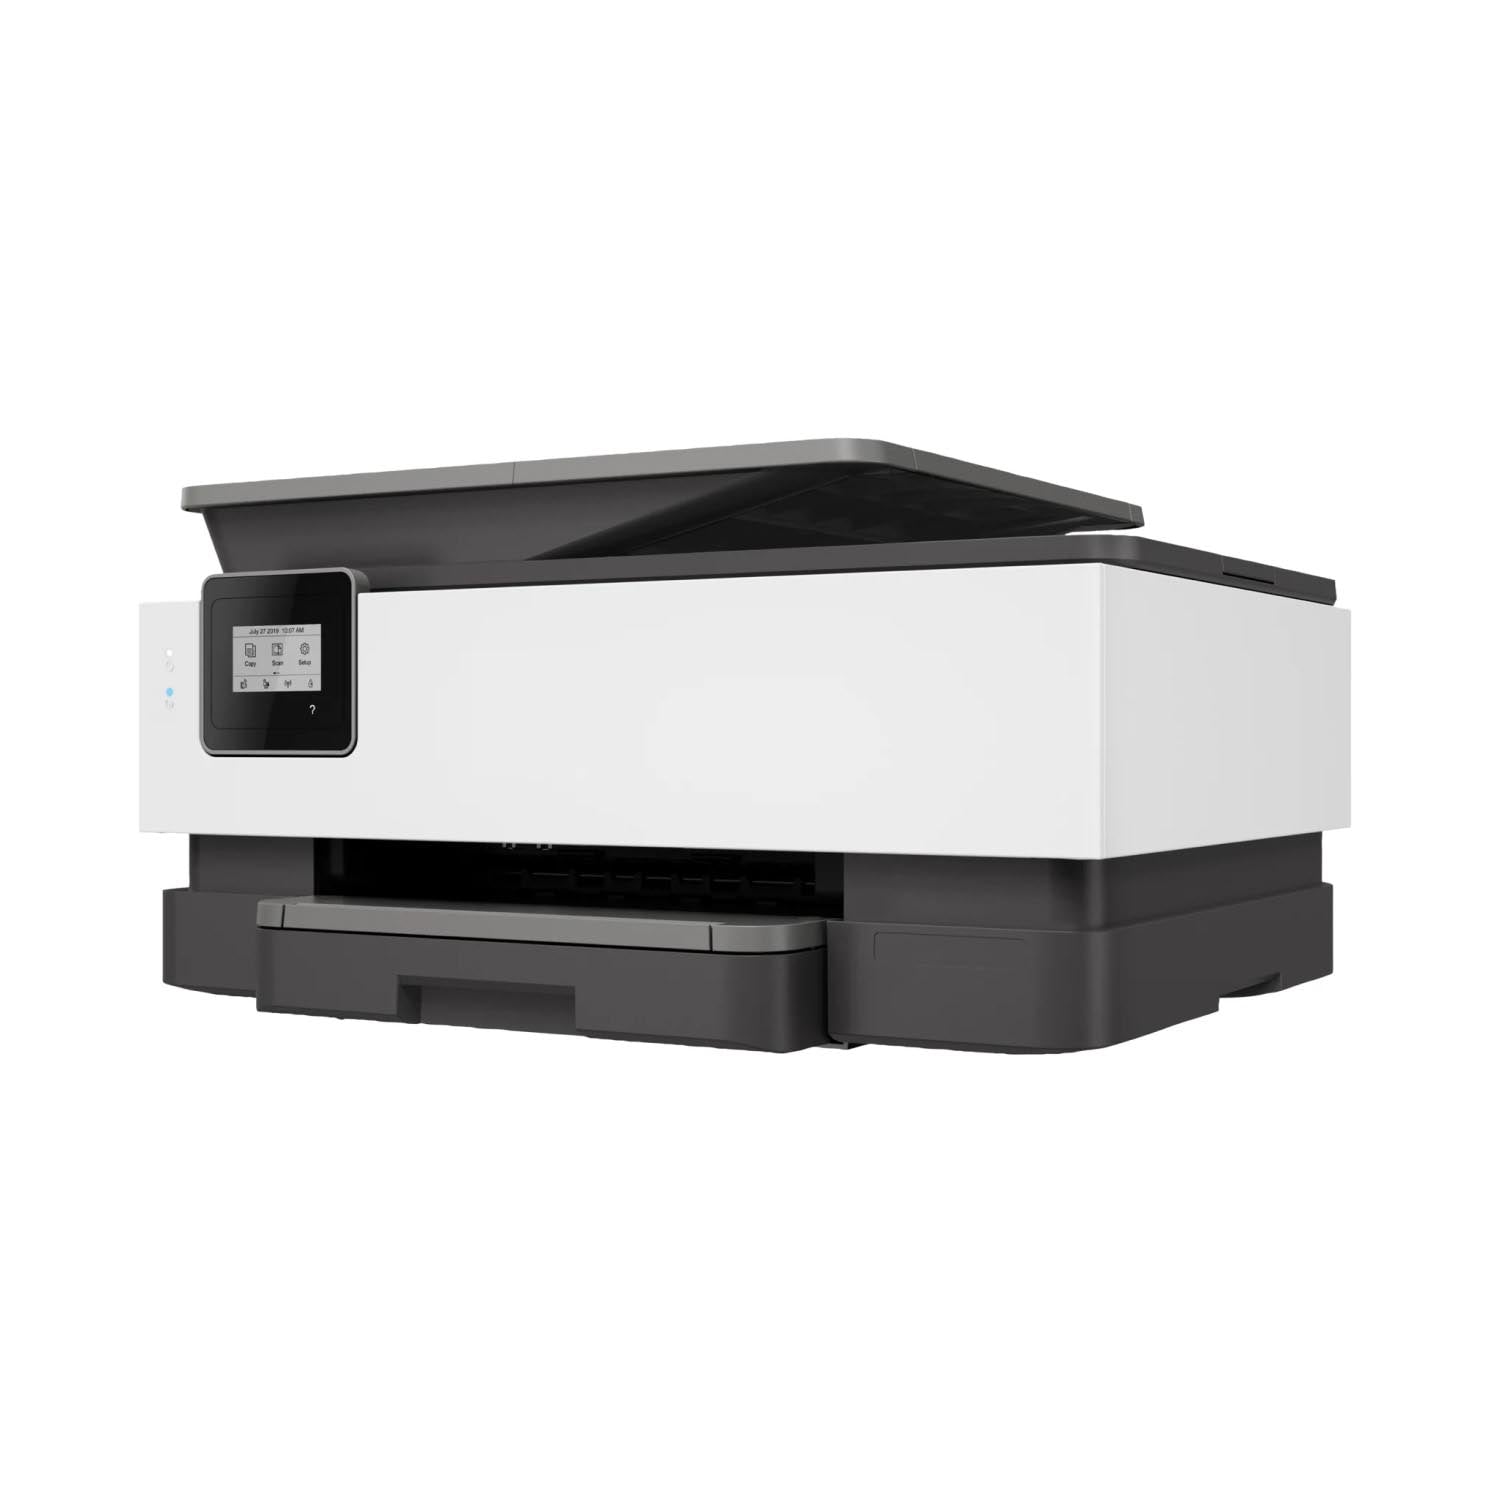 MultiMedia Pro Printer